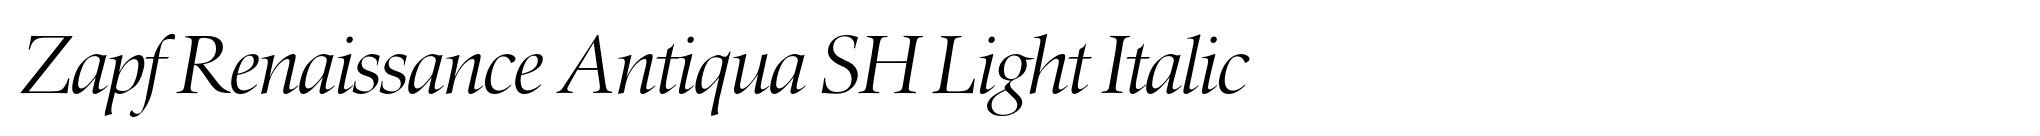 Zapf Renaissance Antiqua SH Light Italic image